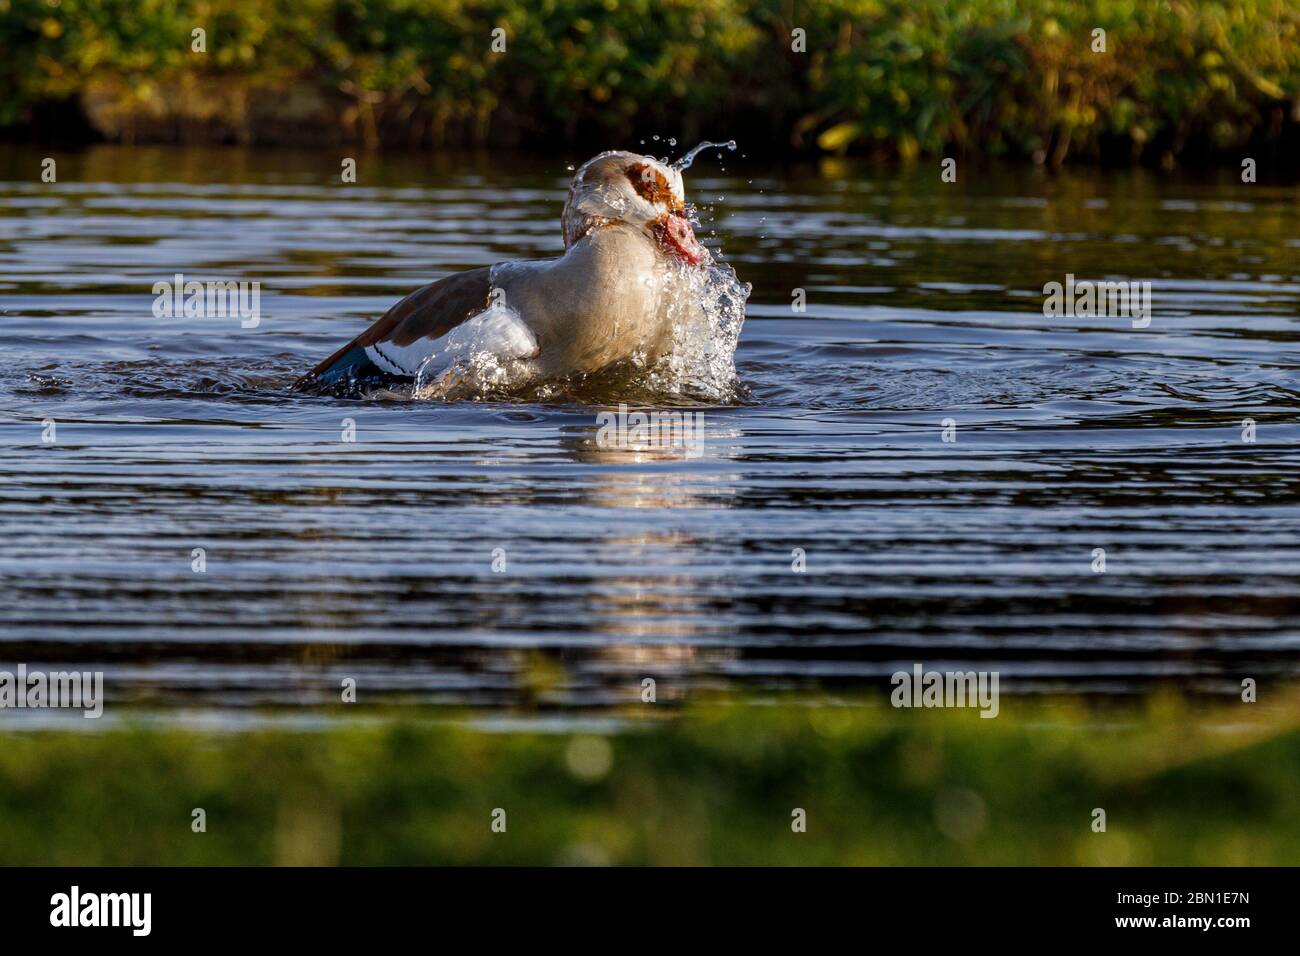 egyptian goose on a lake having a splash or bath Stock Photo